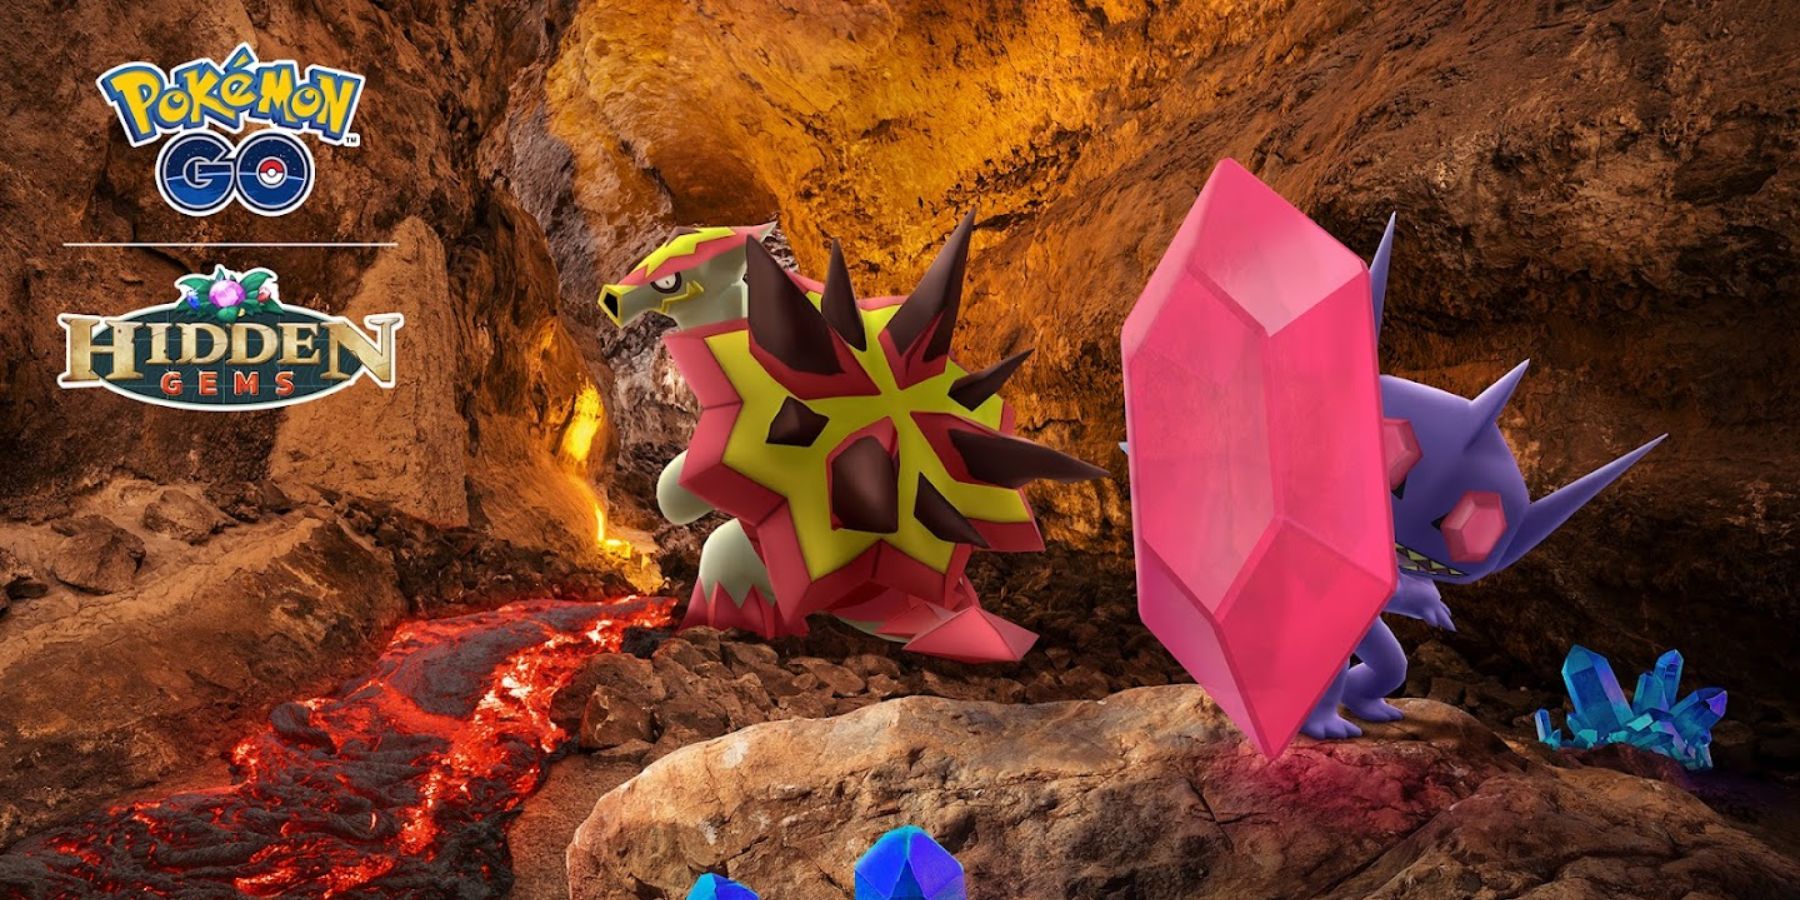 Moltres Raid Guide For Pokémon GO Players: Hidden Gems